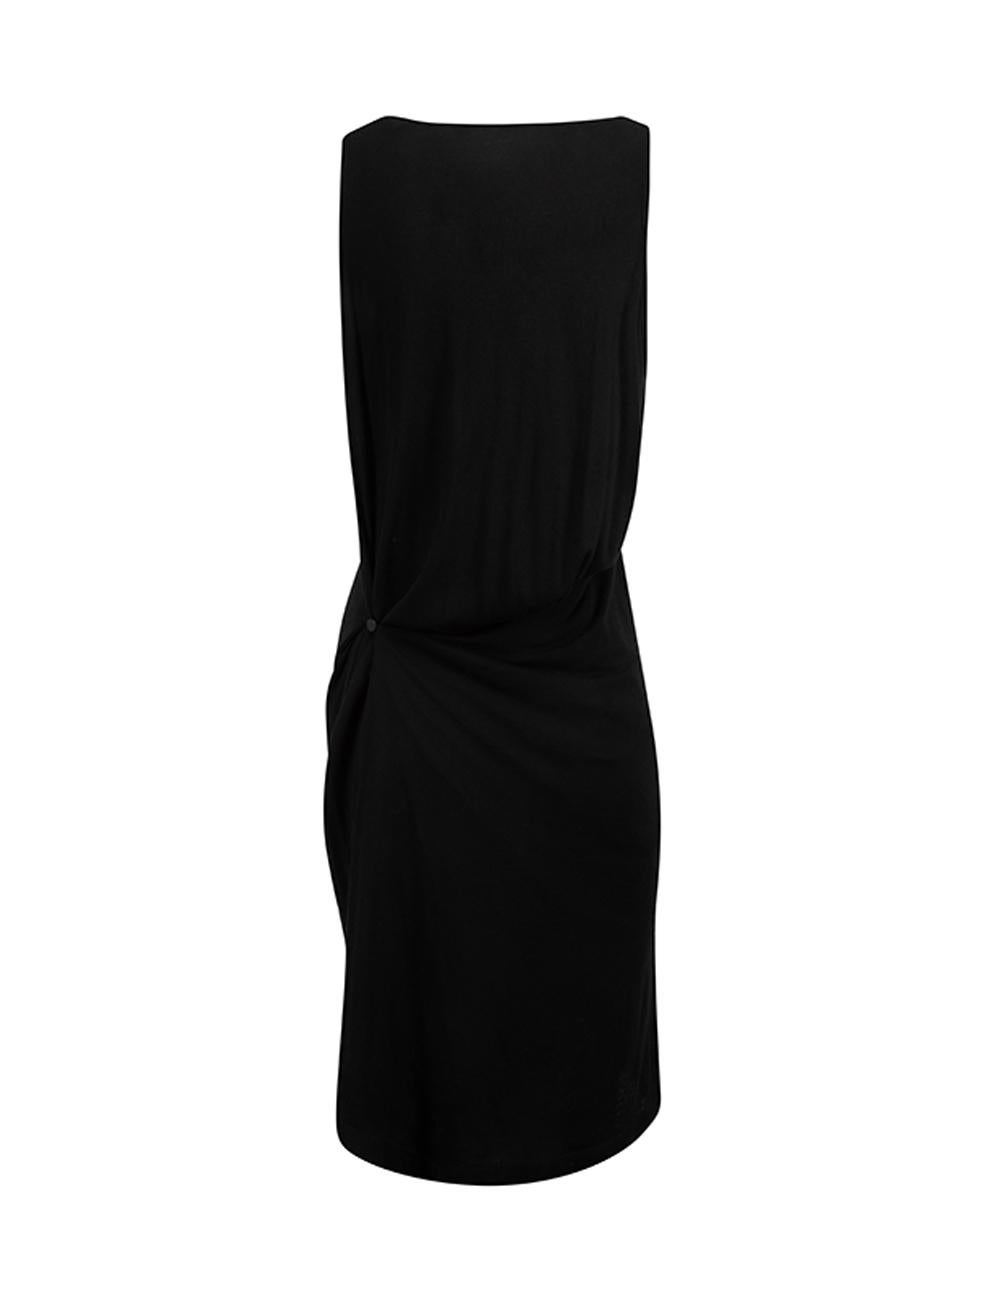 Pre-Loved Rag & Bone Women's Black Wrap Back Mini Dress In Excellent Condition For Sale In London, GB